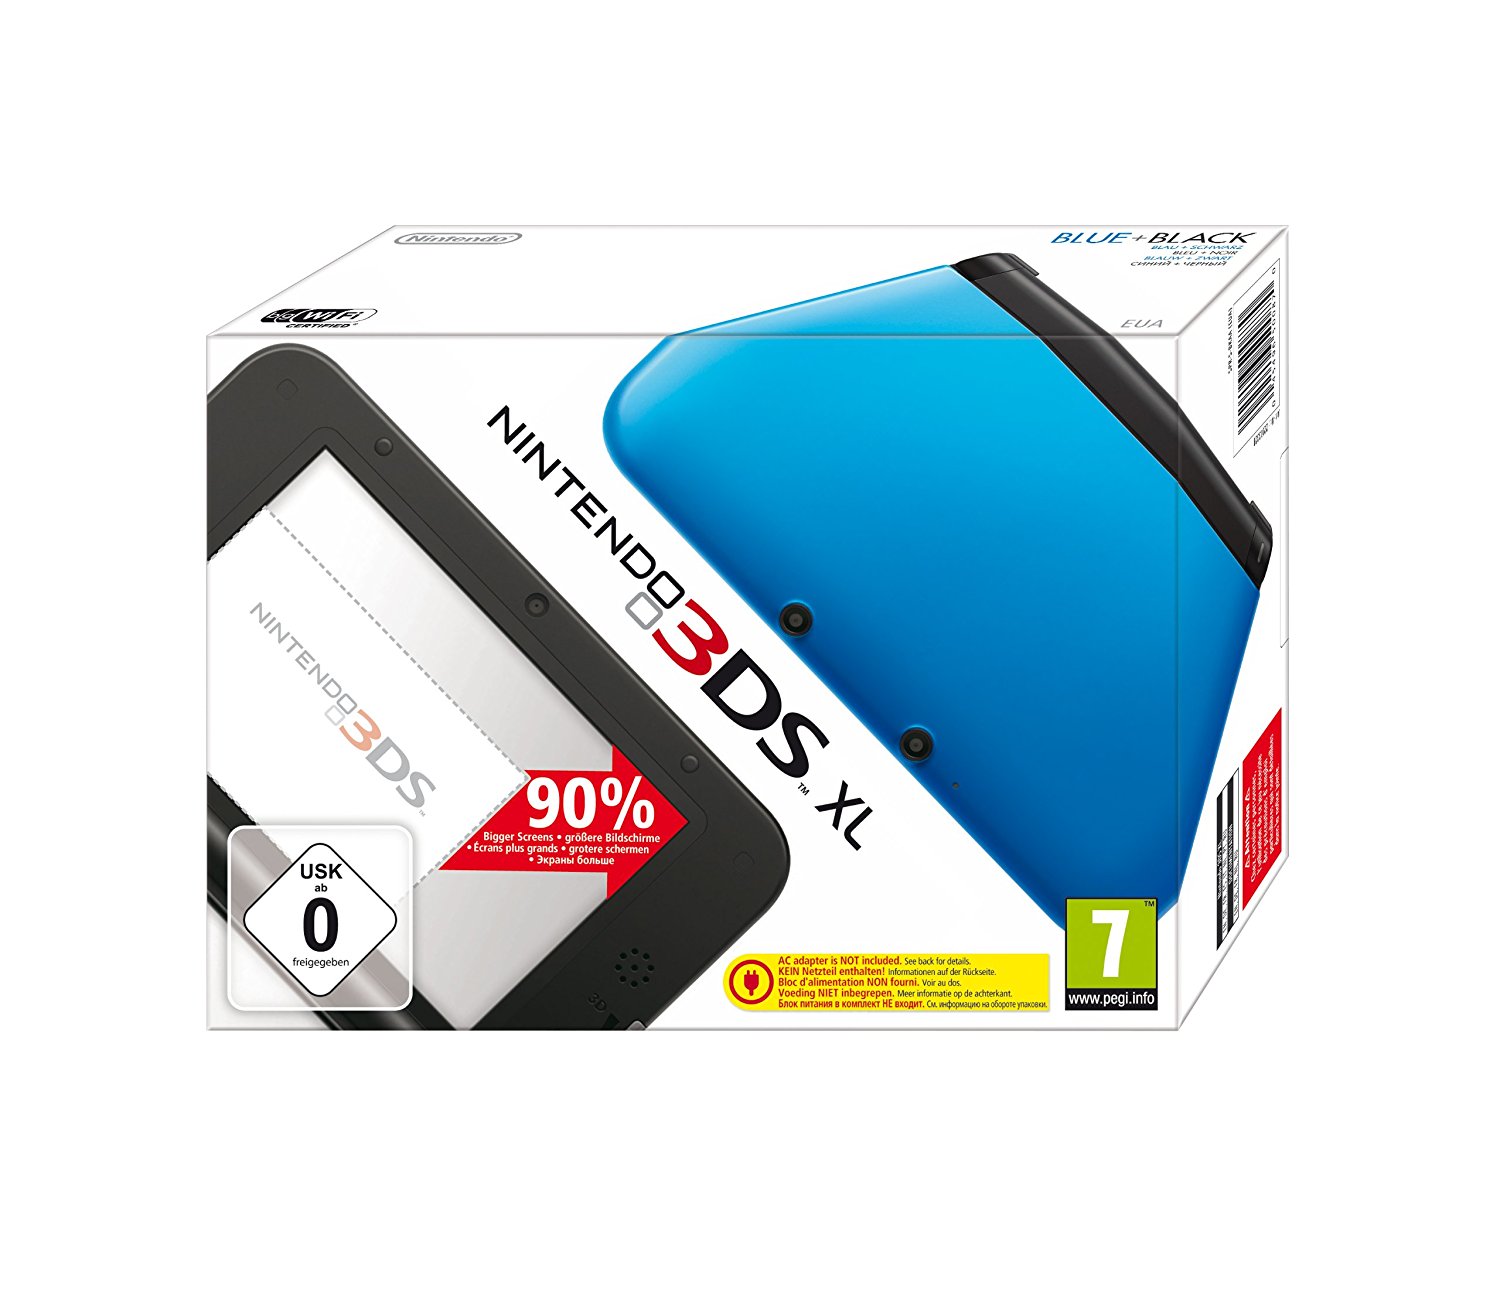 Nintendo 3DS XL Konsole - Blau/Schwarz